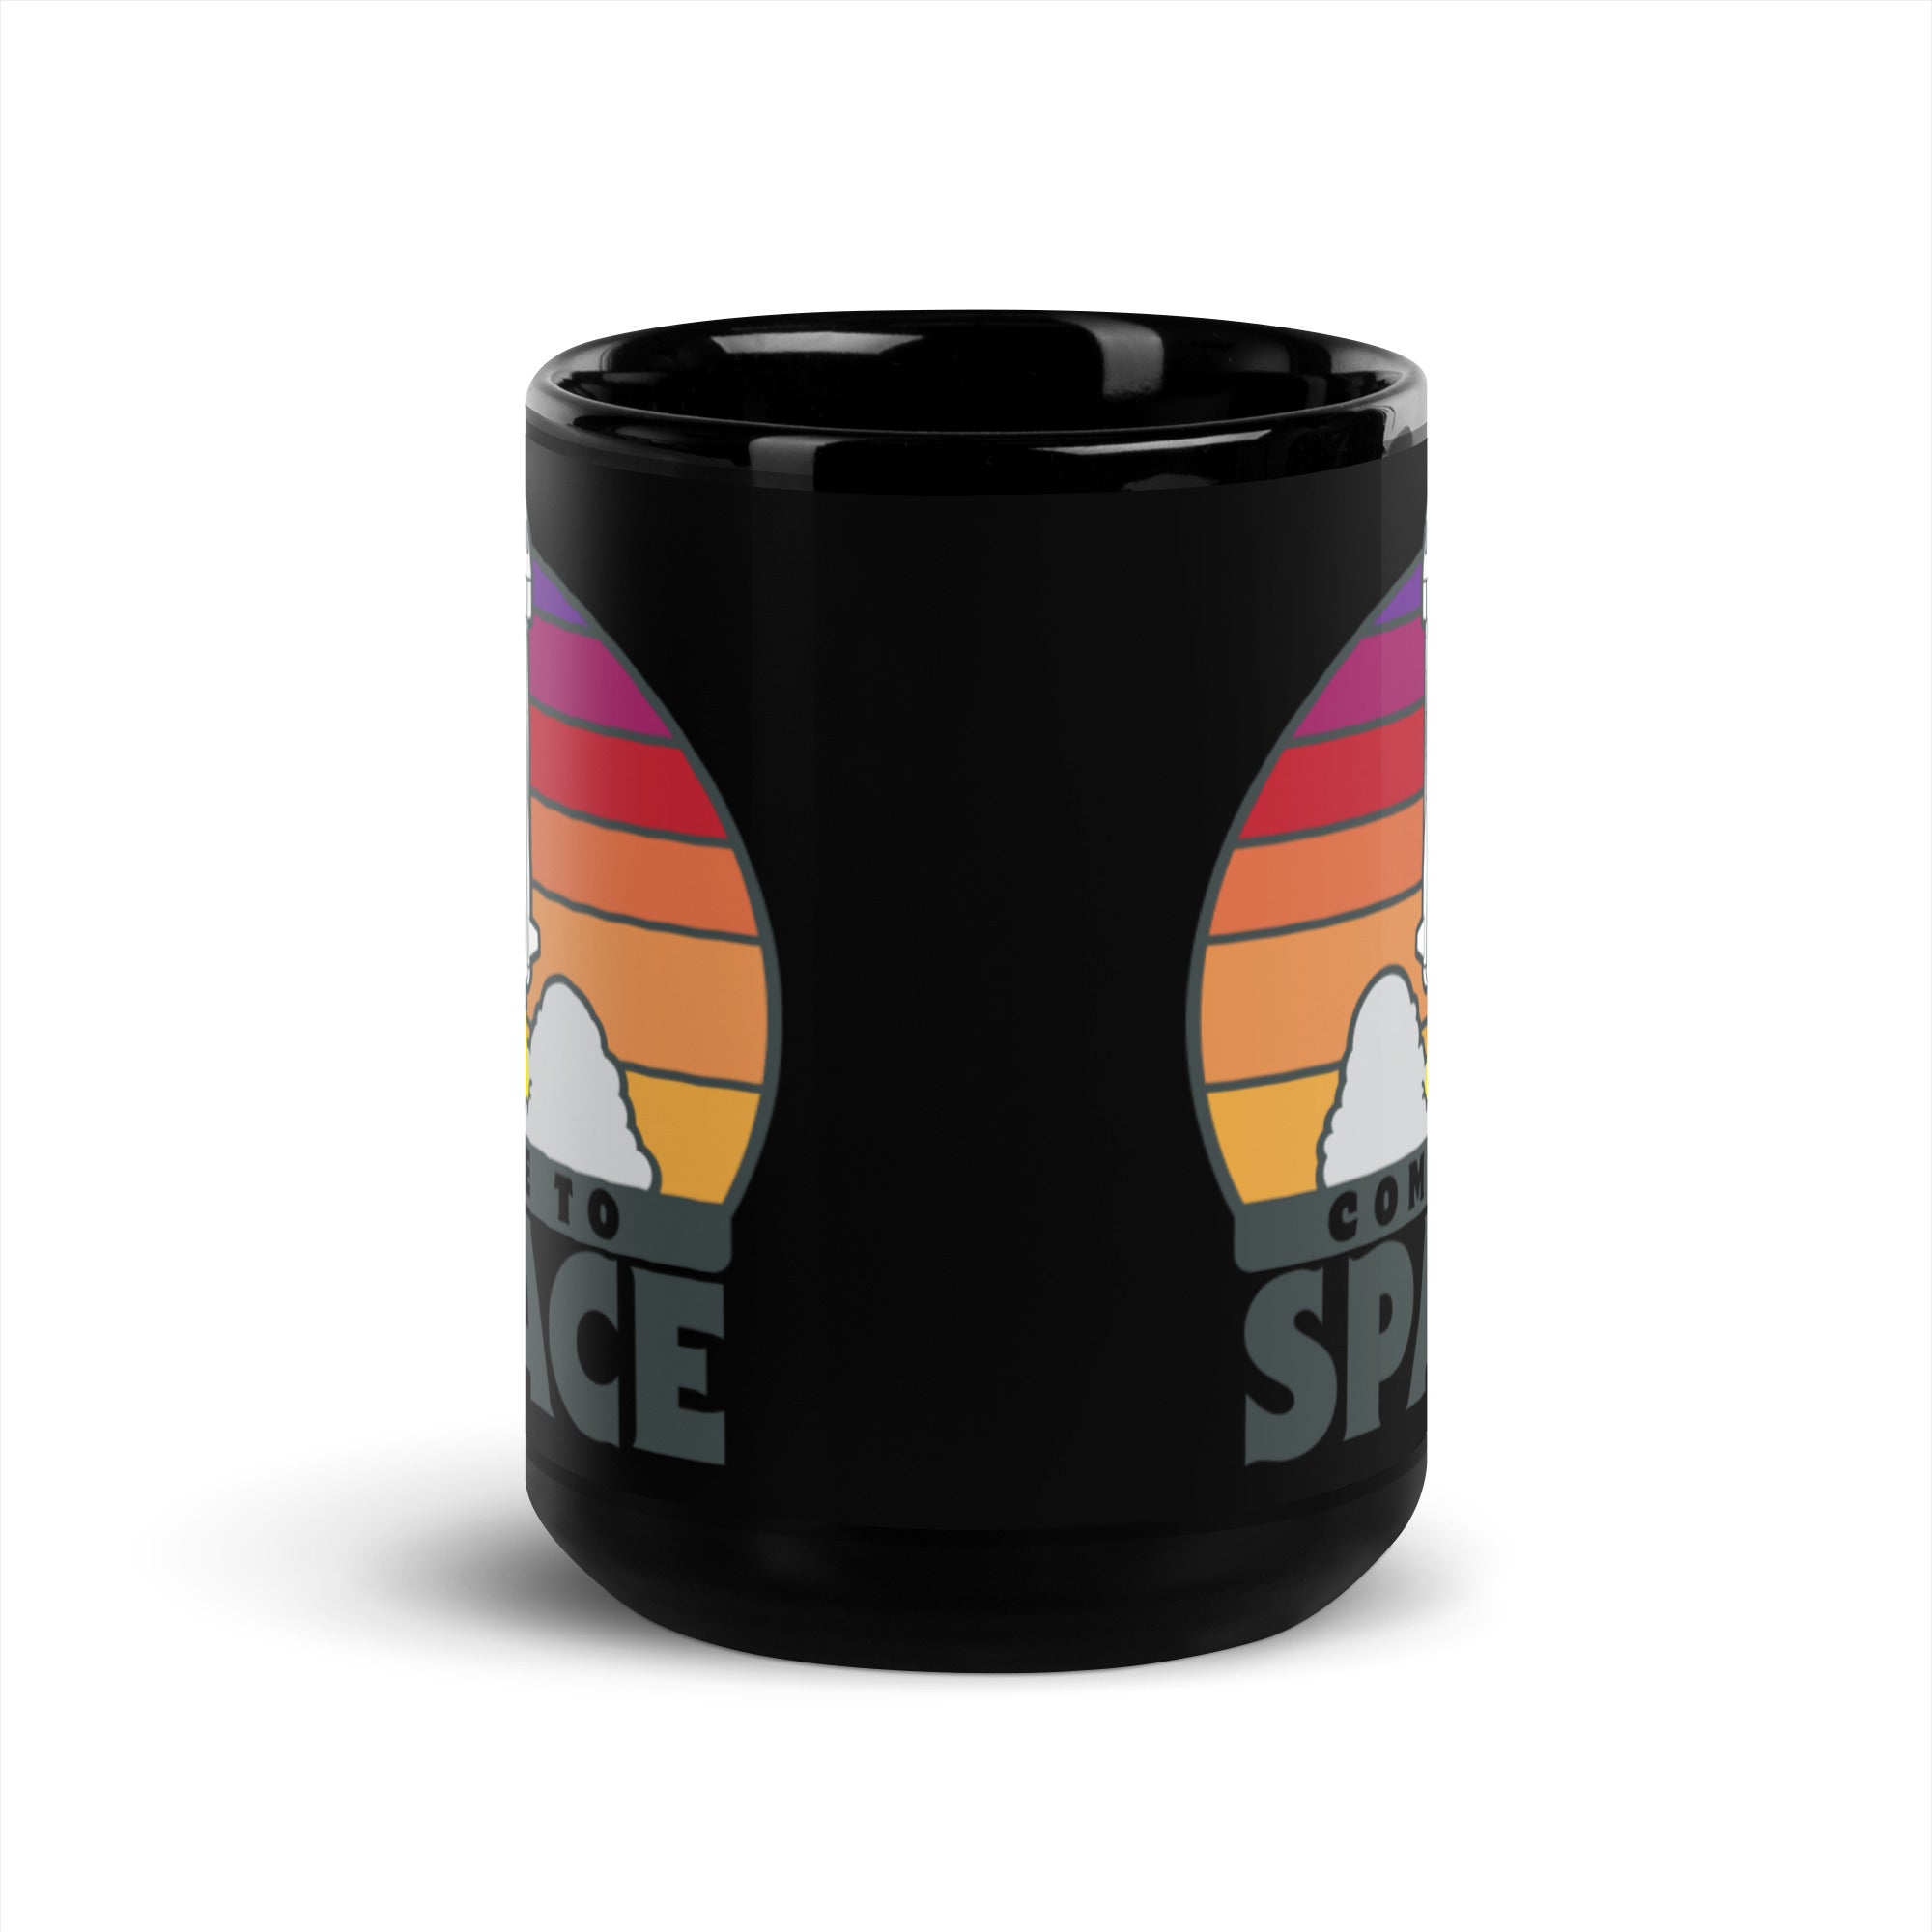 Come To Space Black Glossy Mug